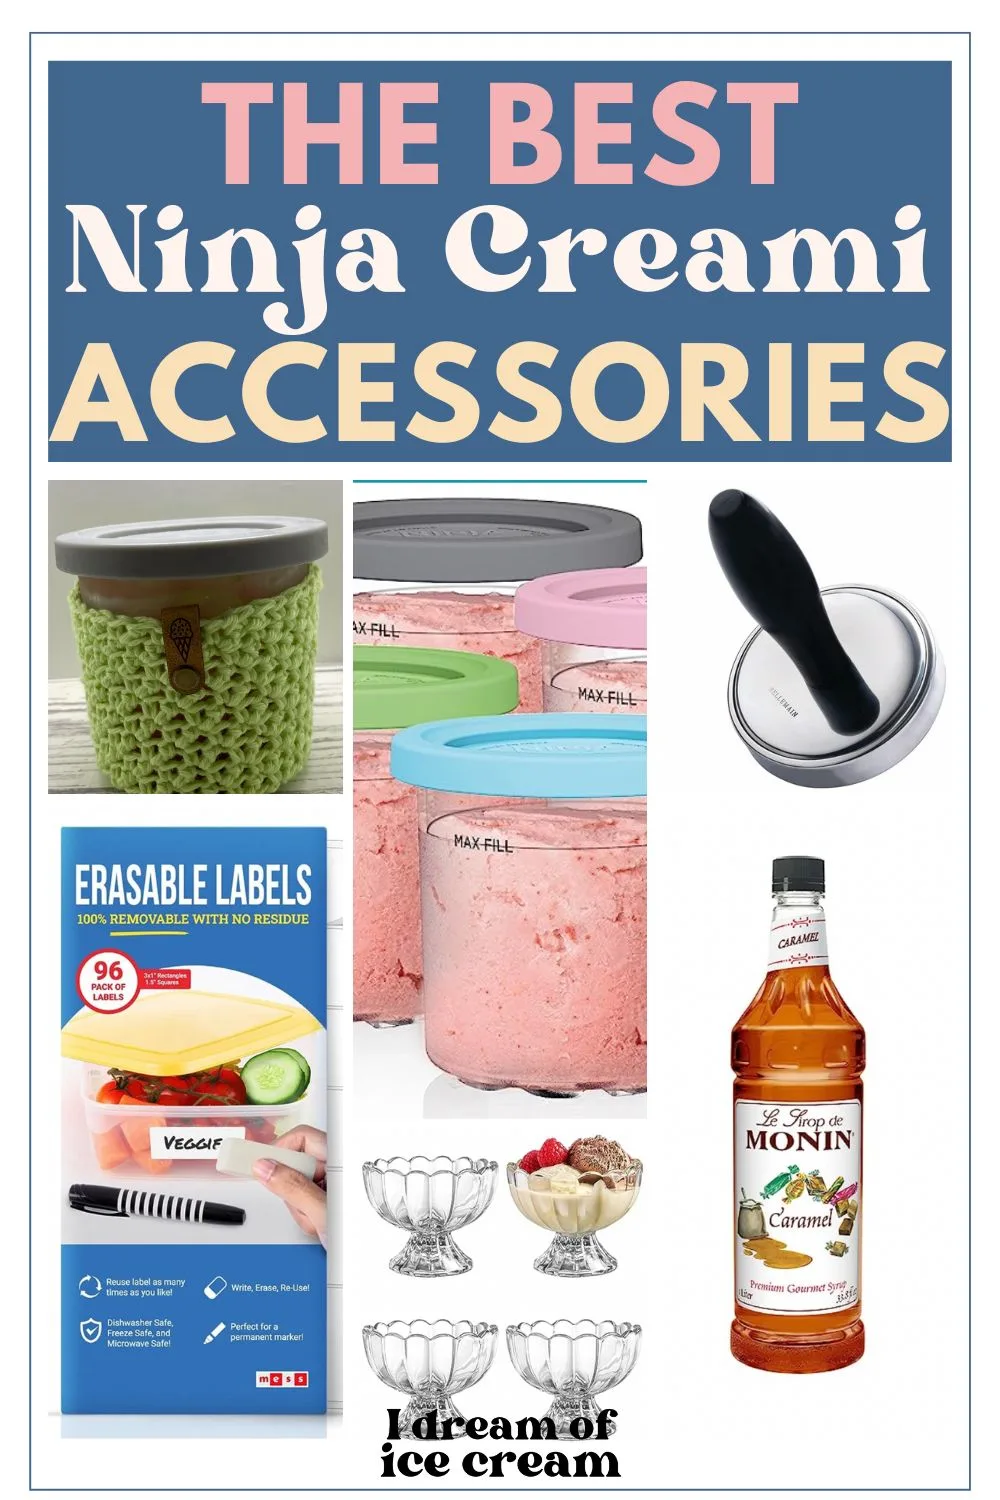 Don't break your Ninja Creami!!! Are the Ninja Creami containers